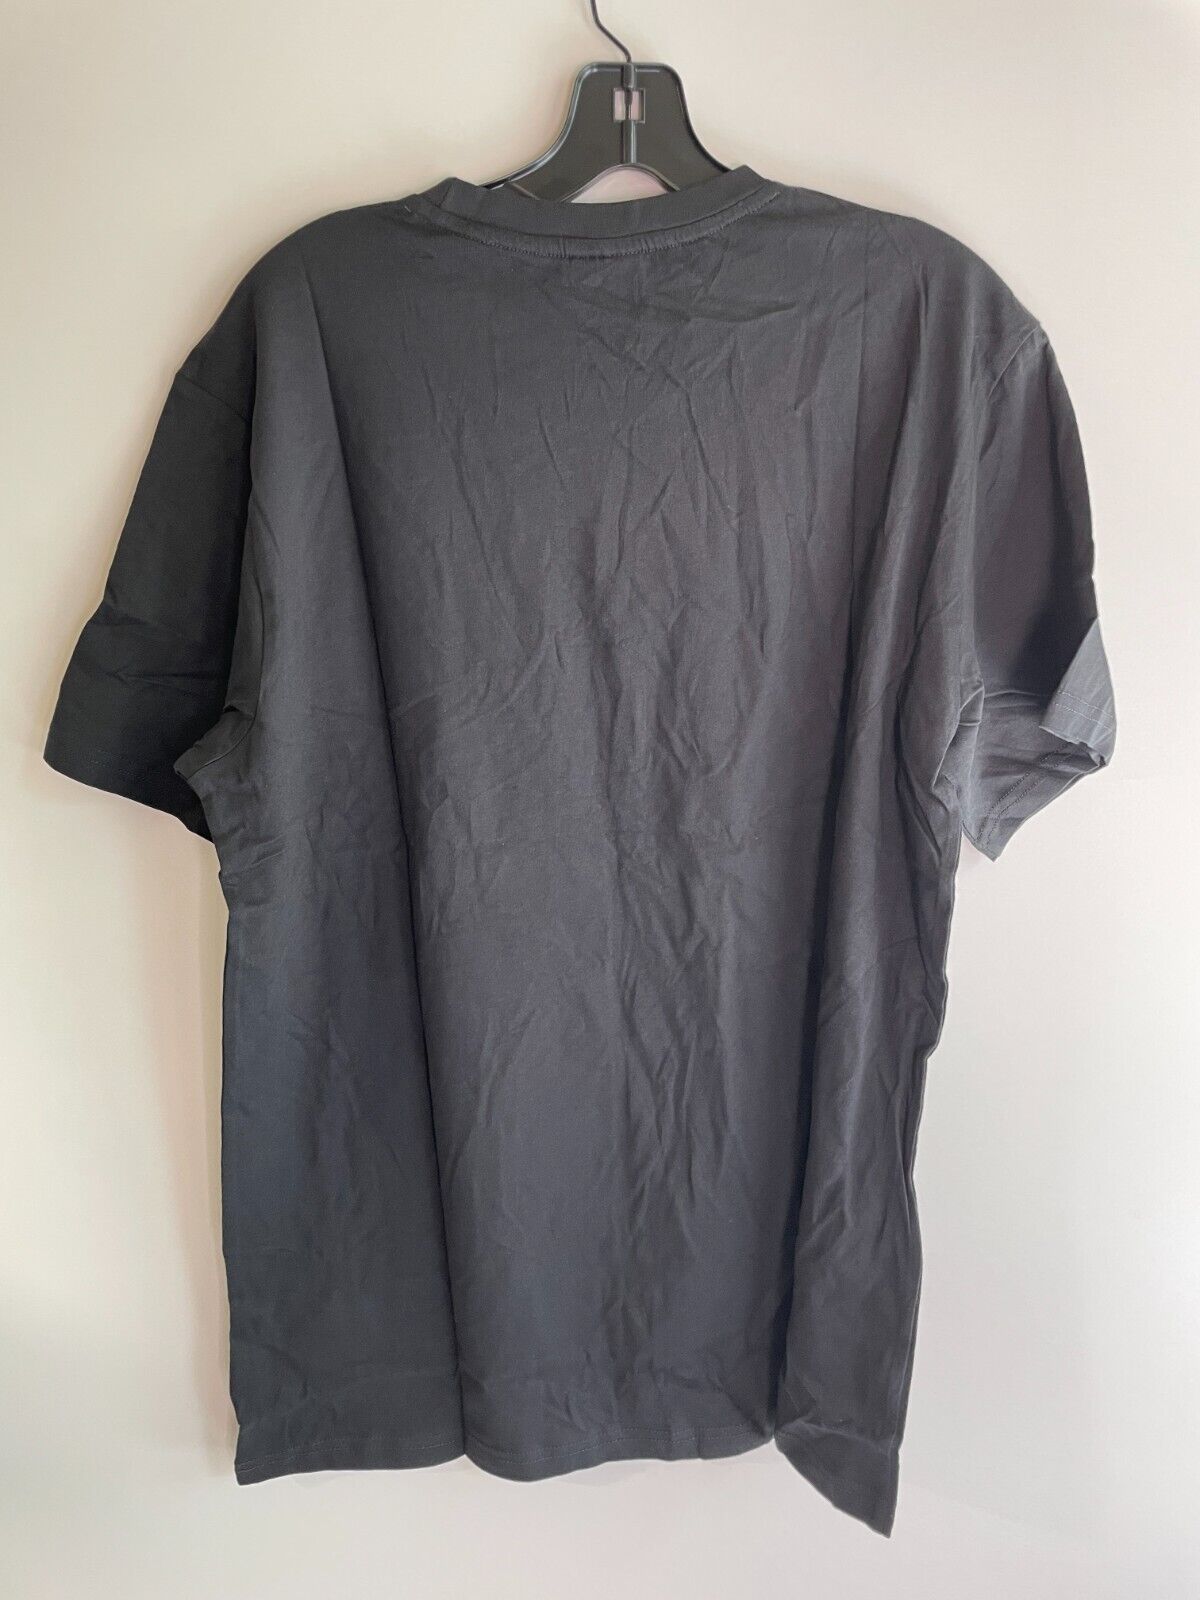 Gymshark Mens L Crest T-Shirt Black Regular Fit Short Sleeve A1A3J-BBBB